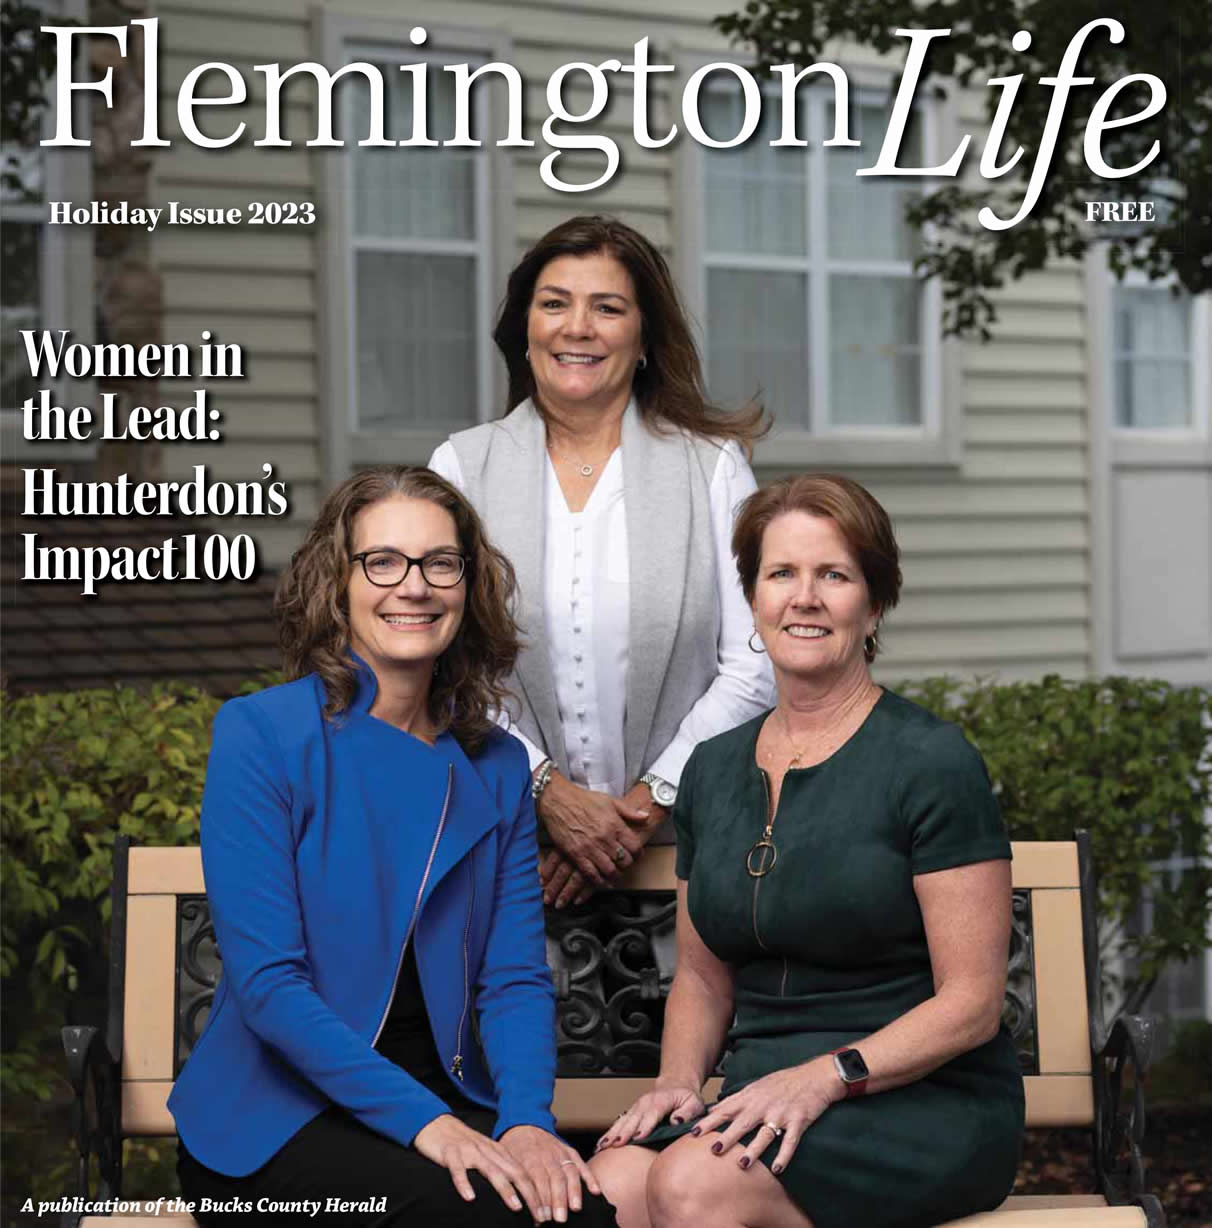 Featured article Flemington Life